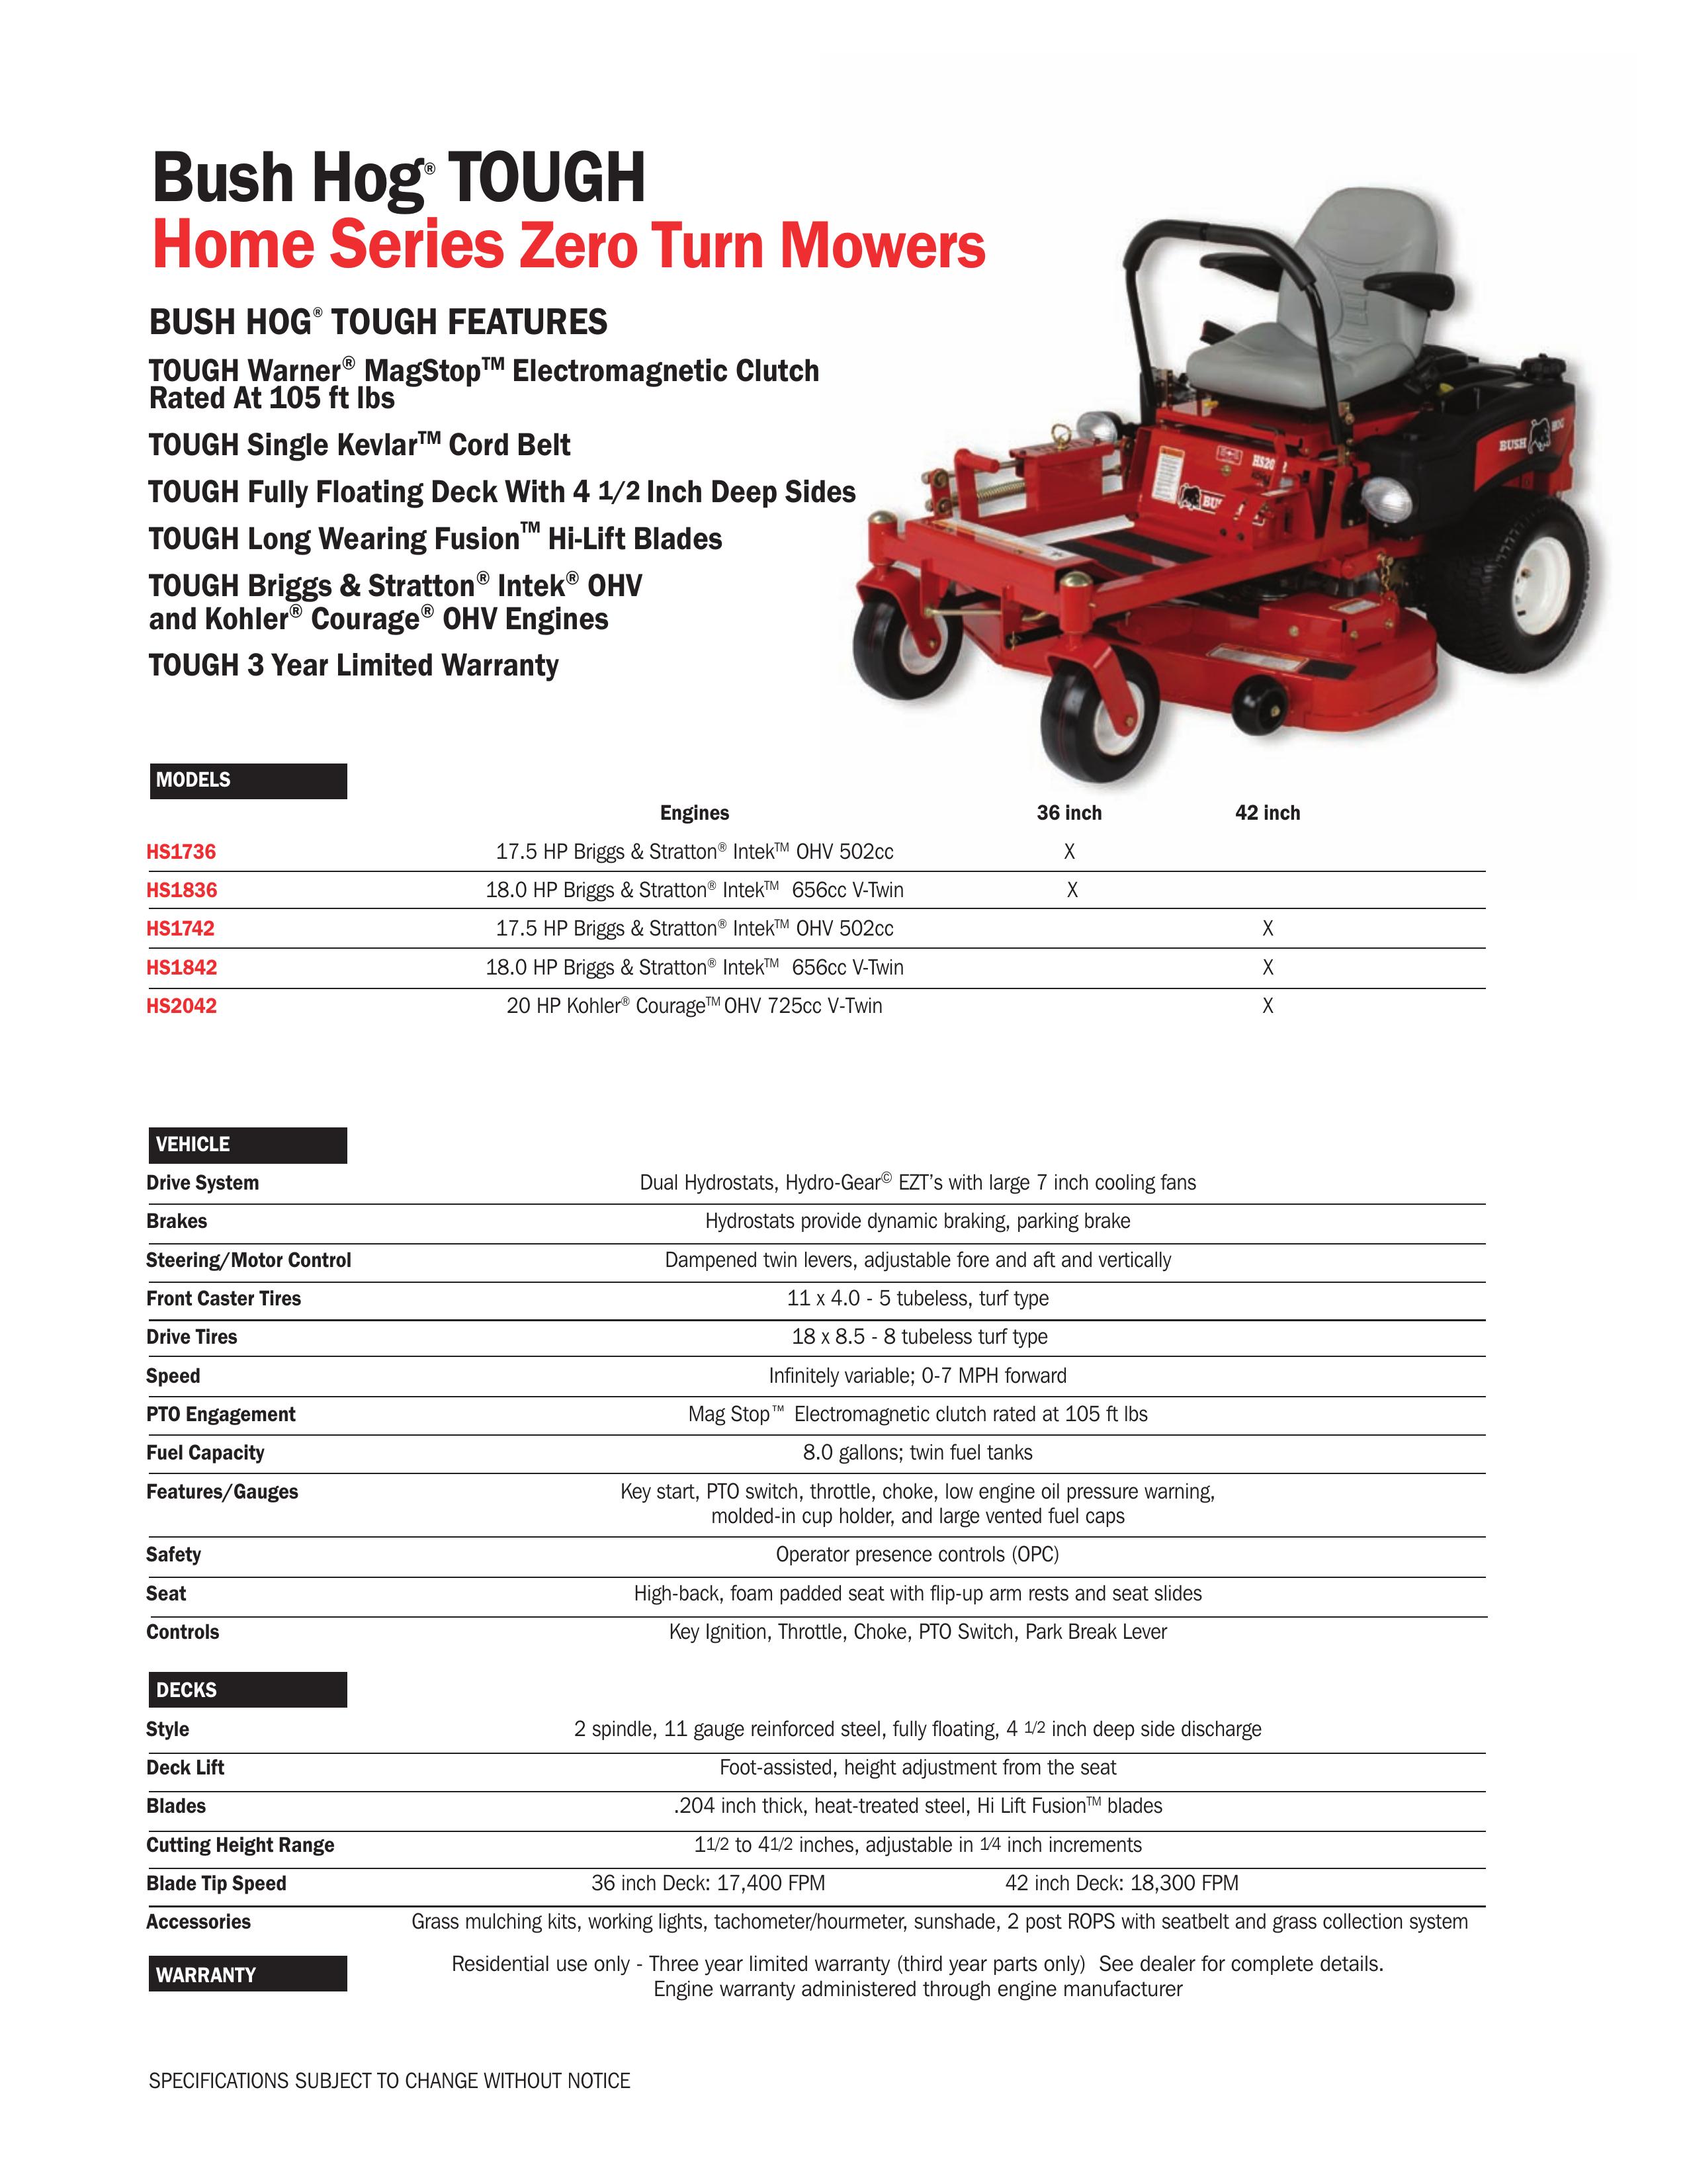 Bush Hog HS1836 Lawn Mower User Manual